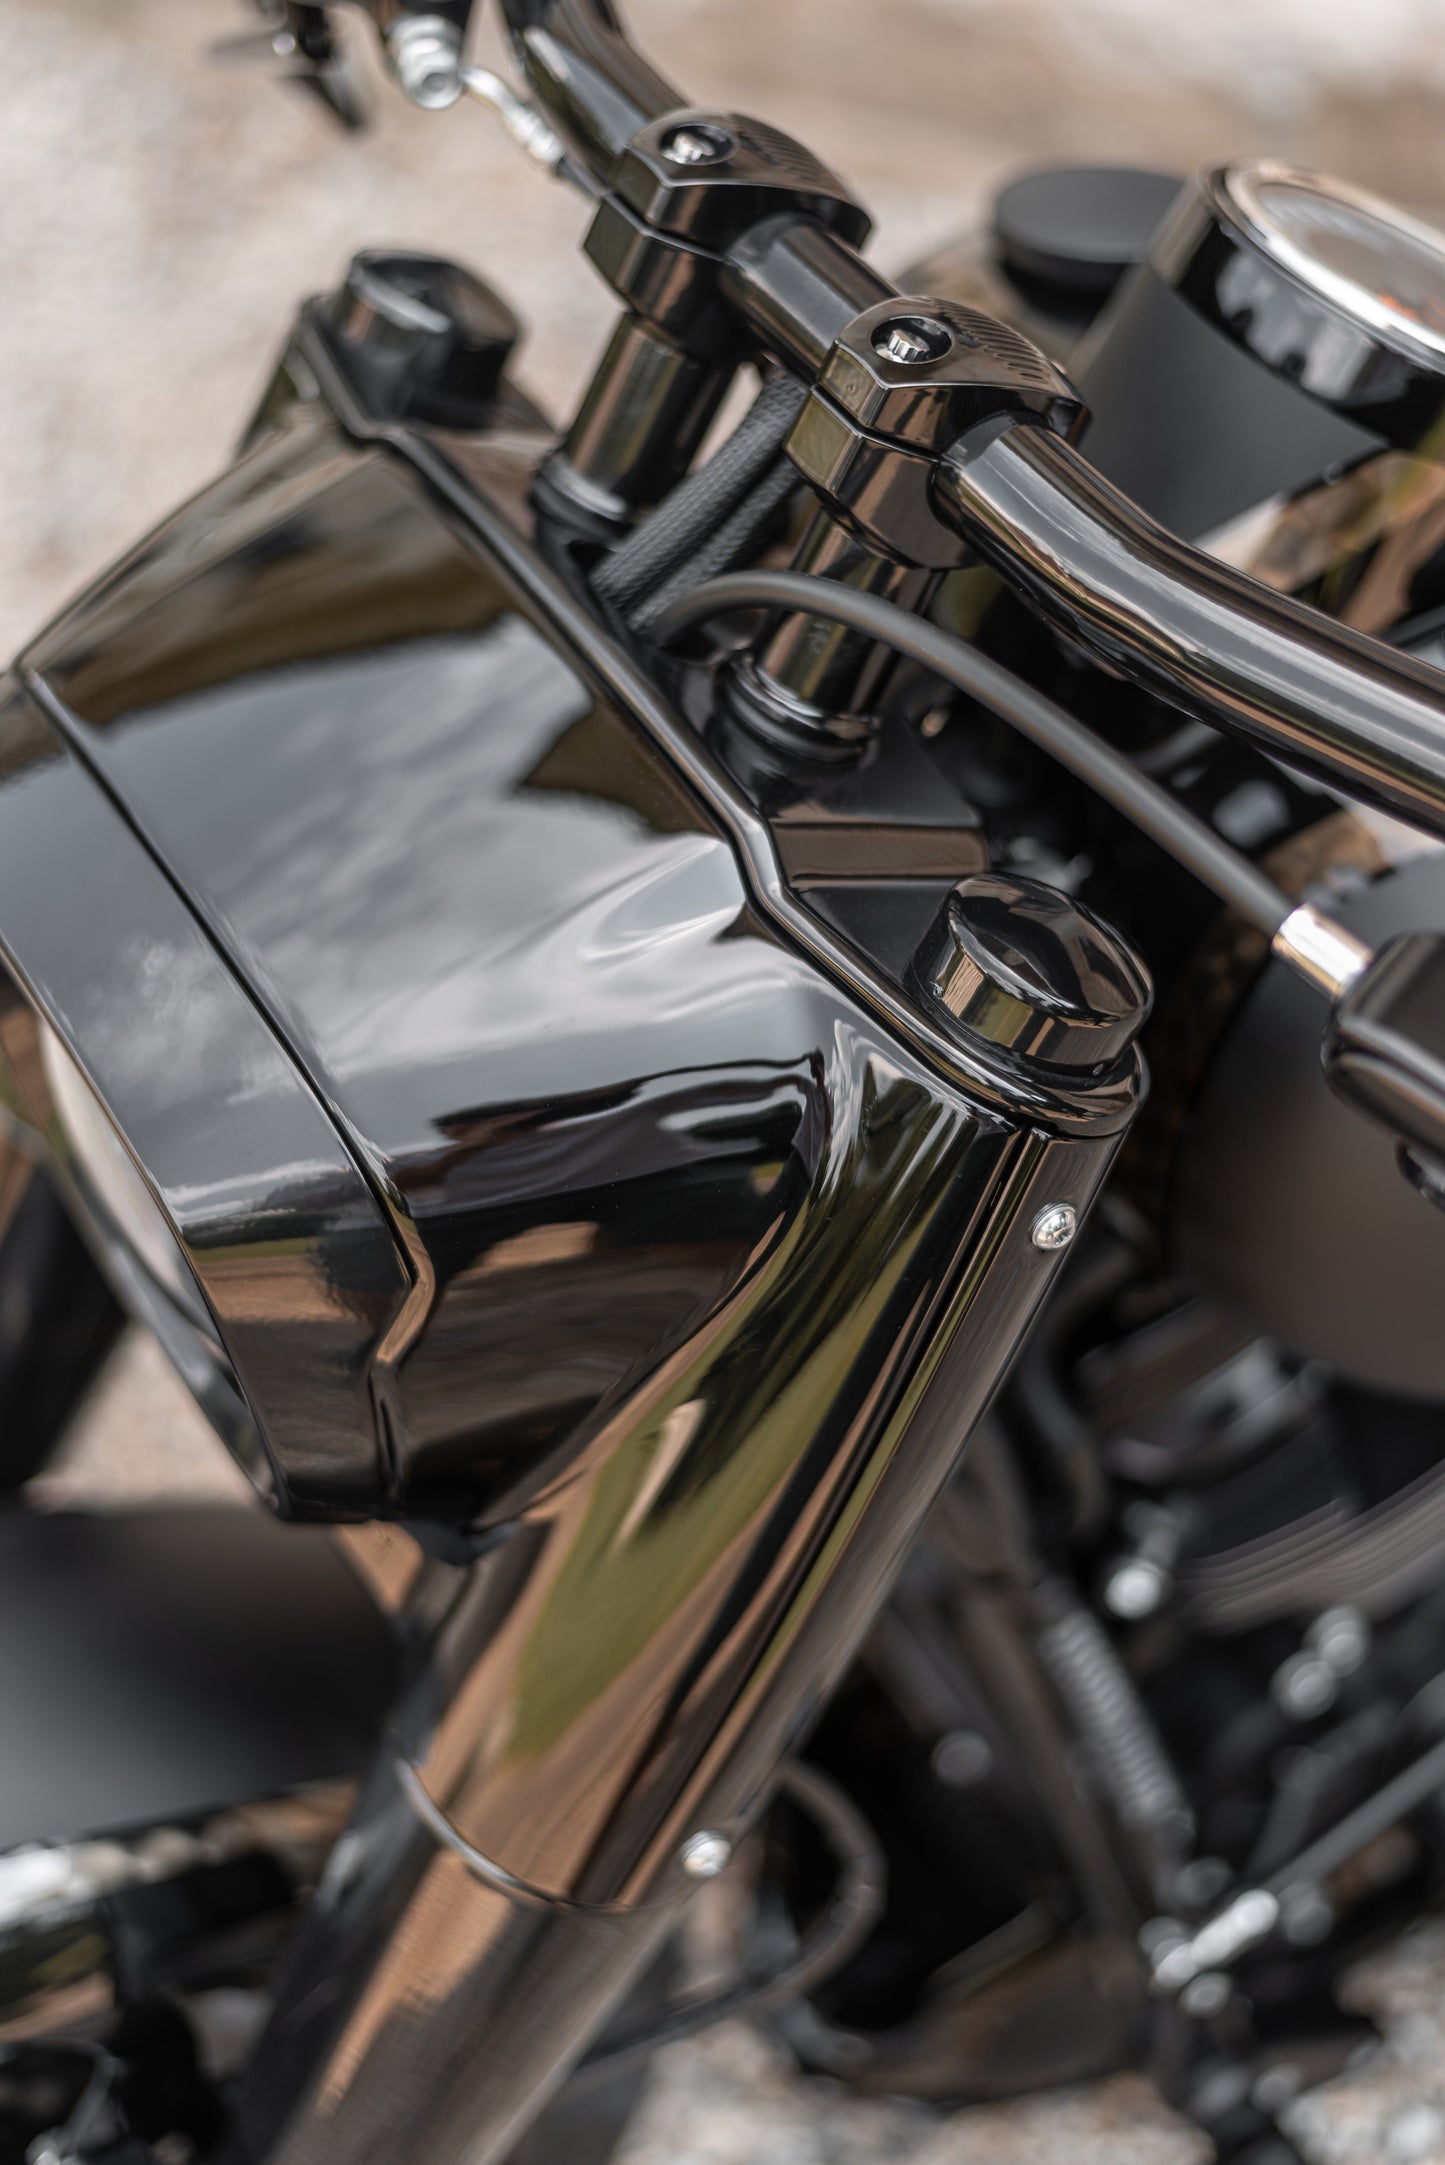 Zoomed Harley Davidson motorcycle with Killer Custom "Avenger" fat drag handlebar from above blurry background